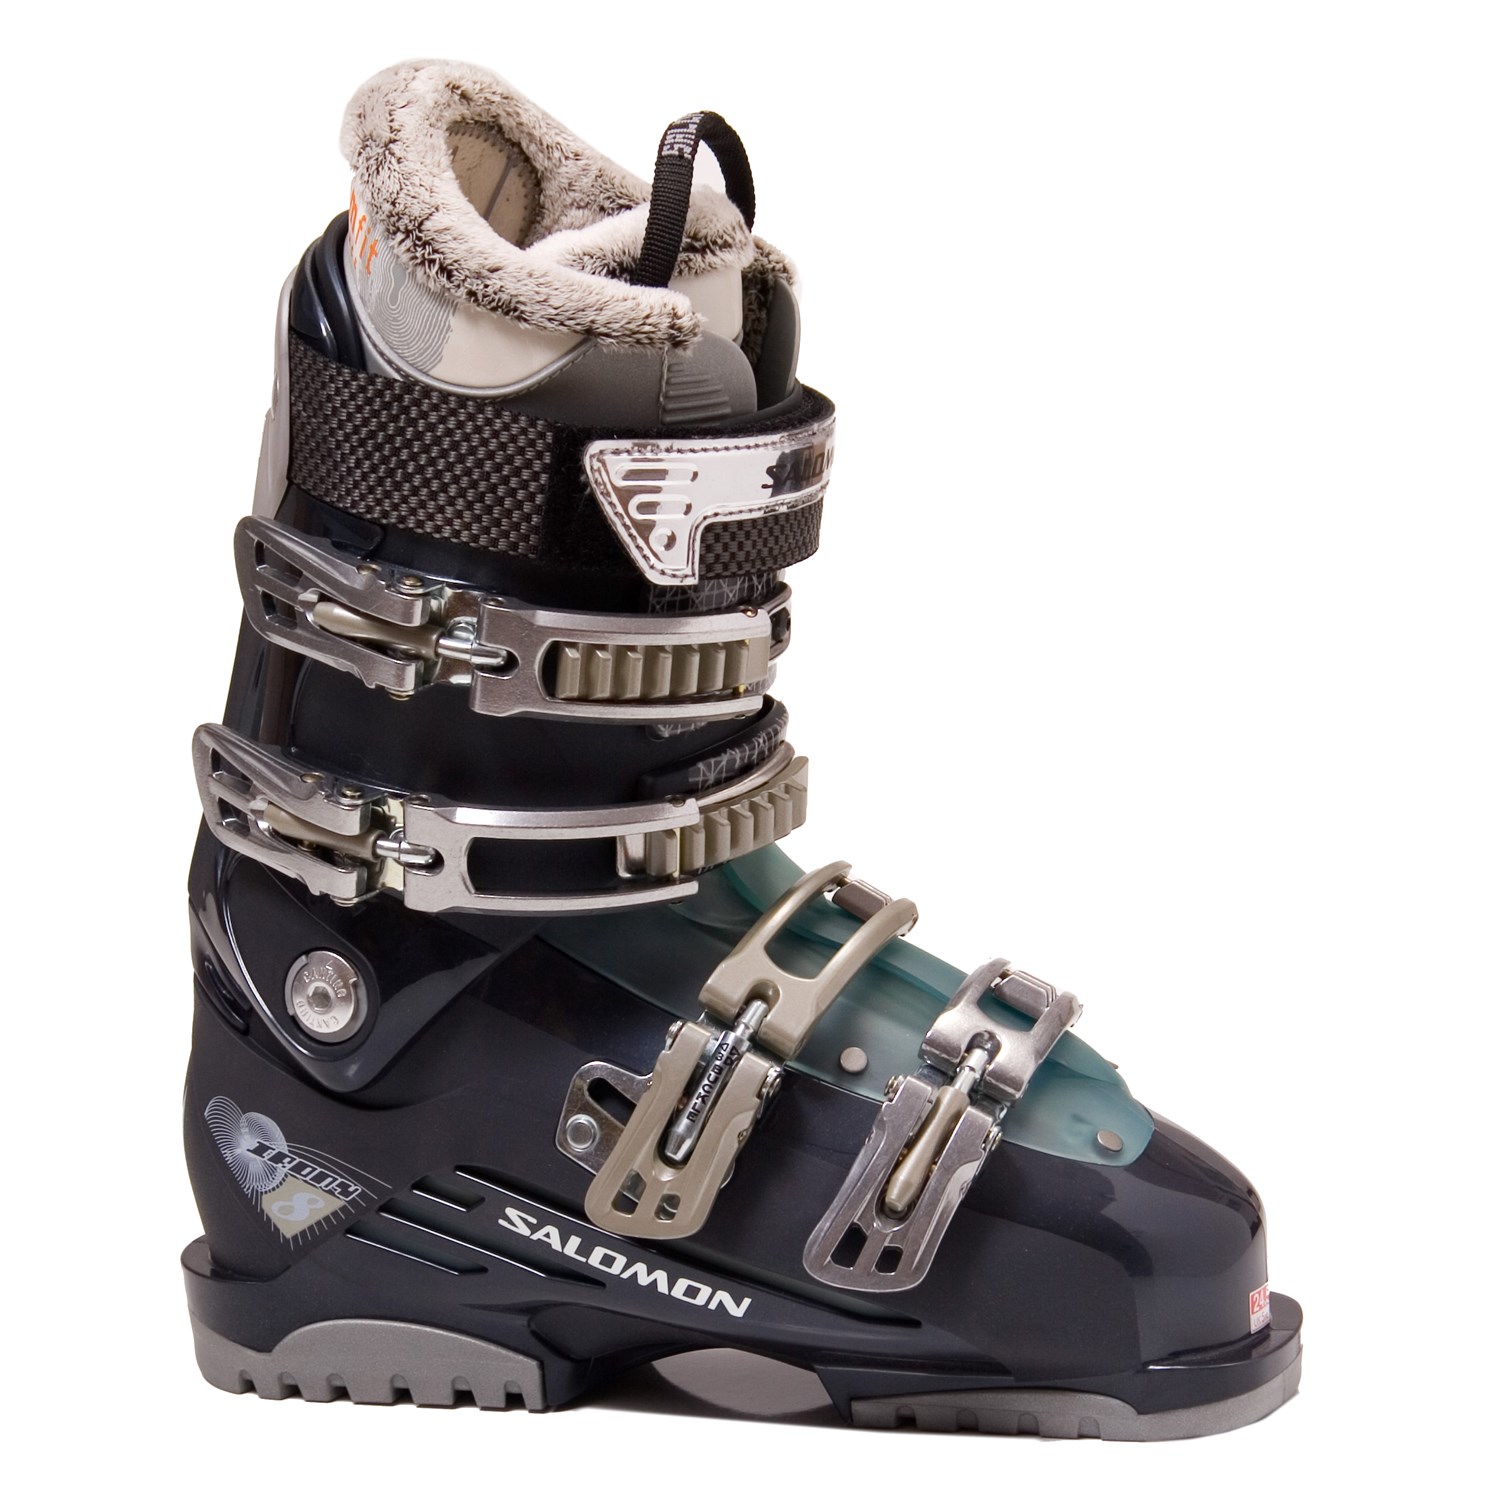 Salomon Irony 8 Ski Boots - Women's 2007 - Used